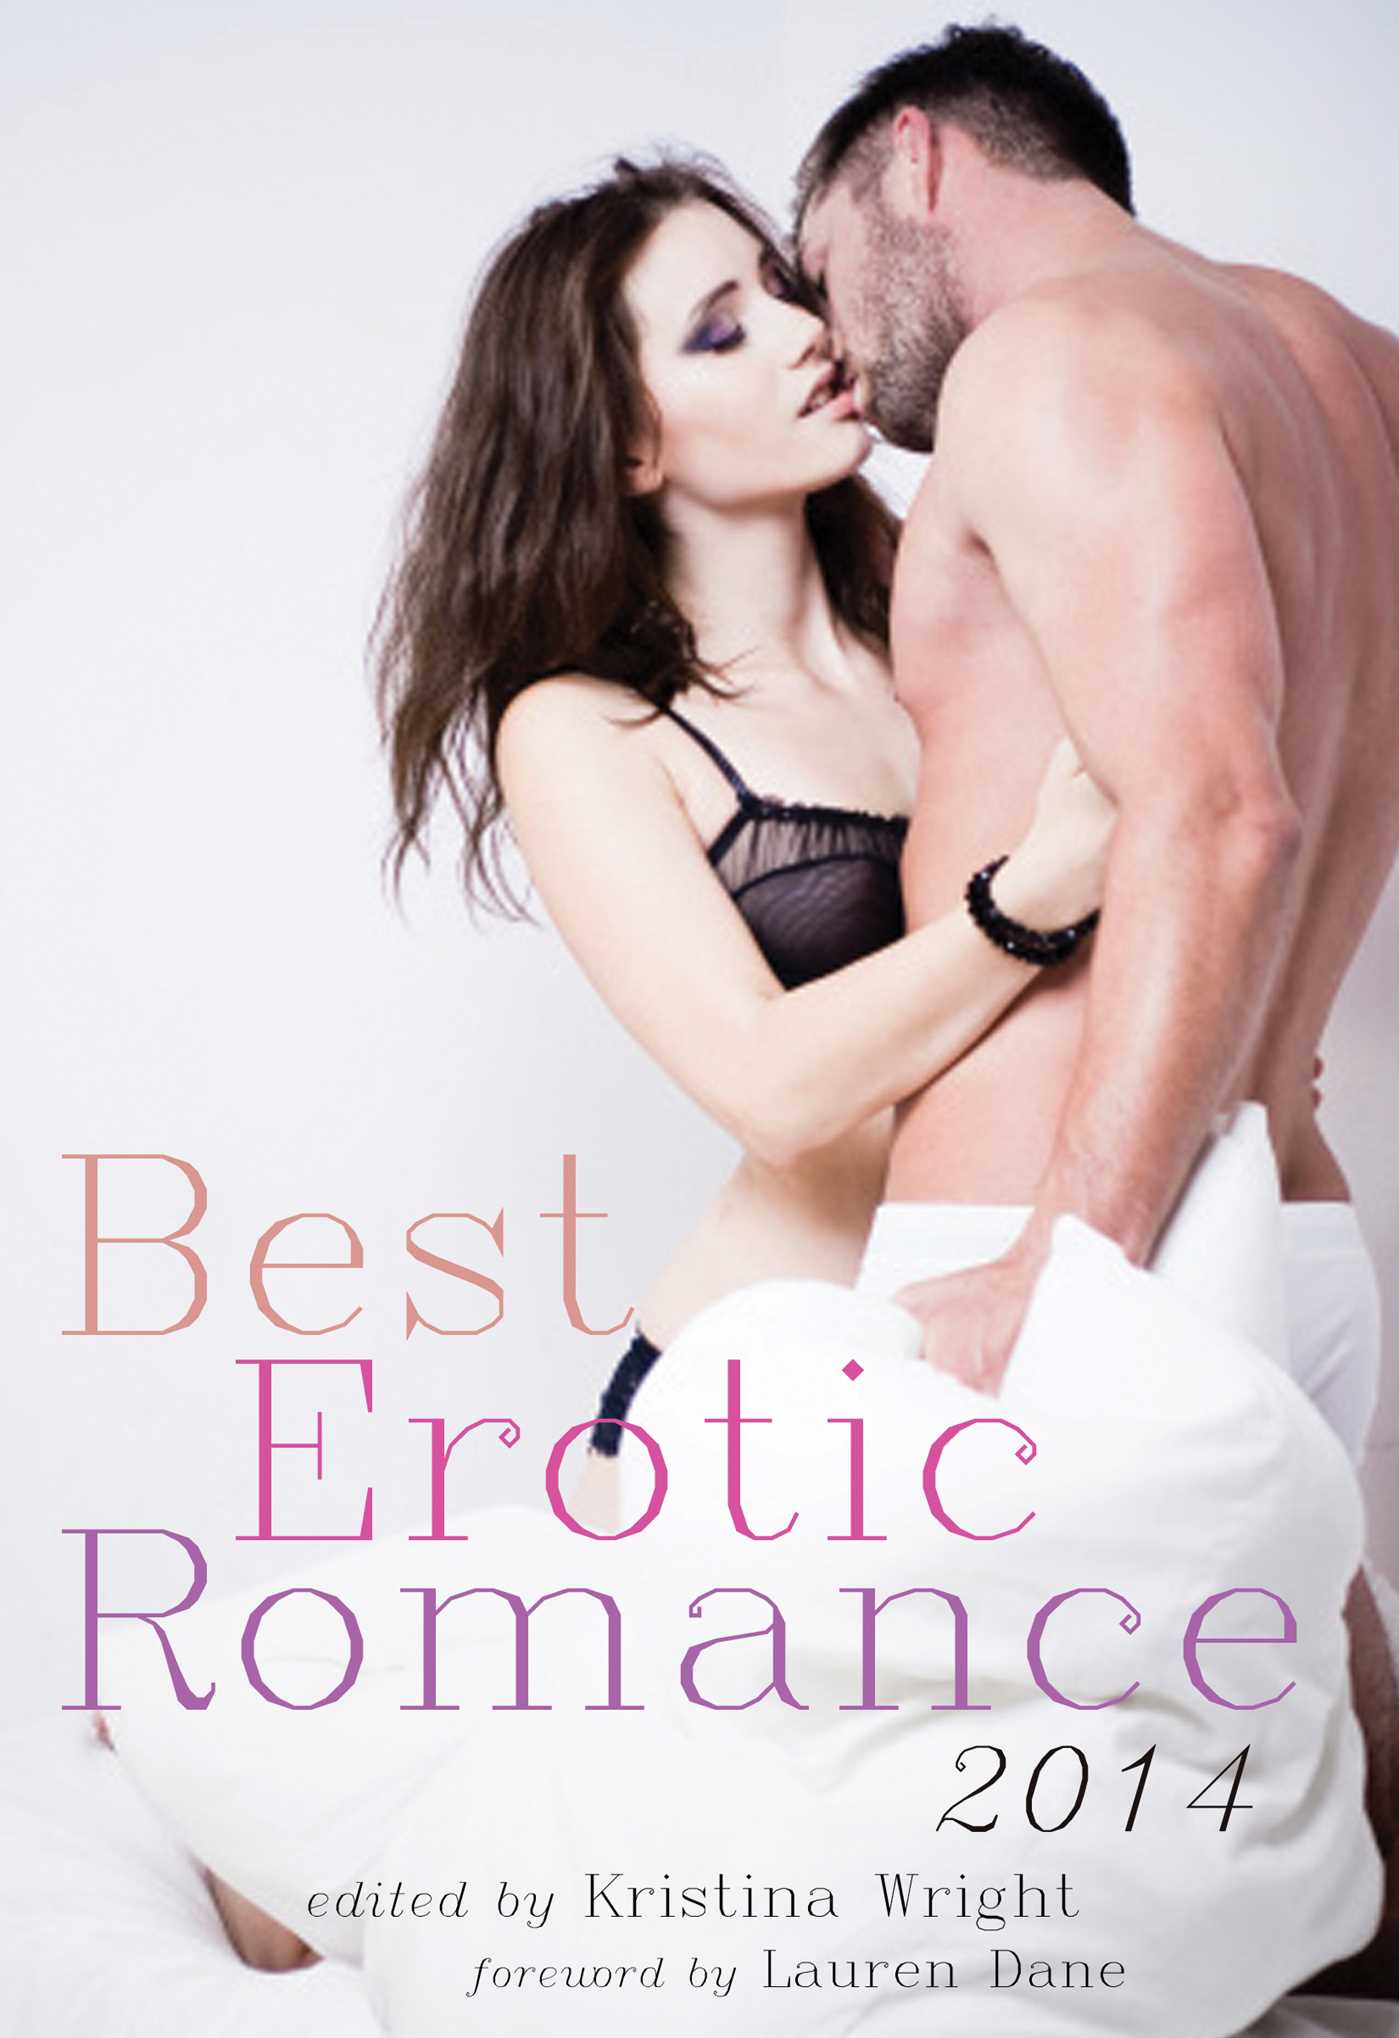 Top erotic romance novels